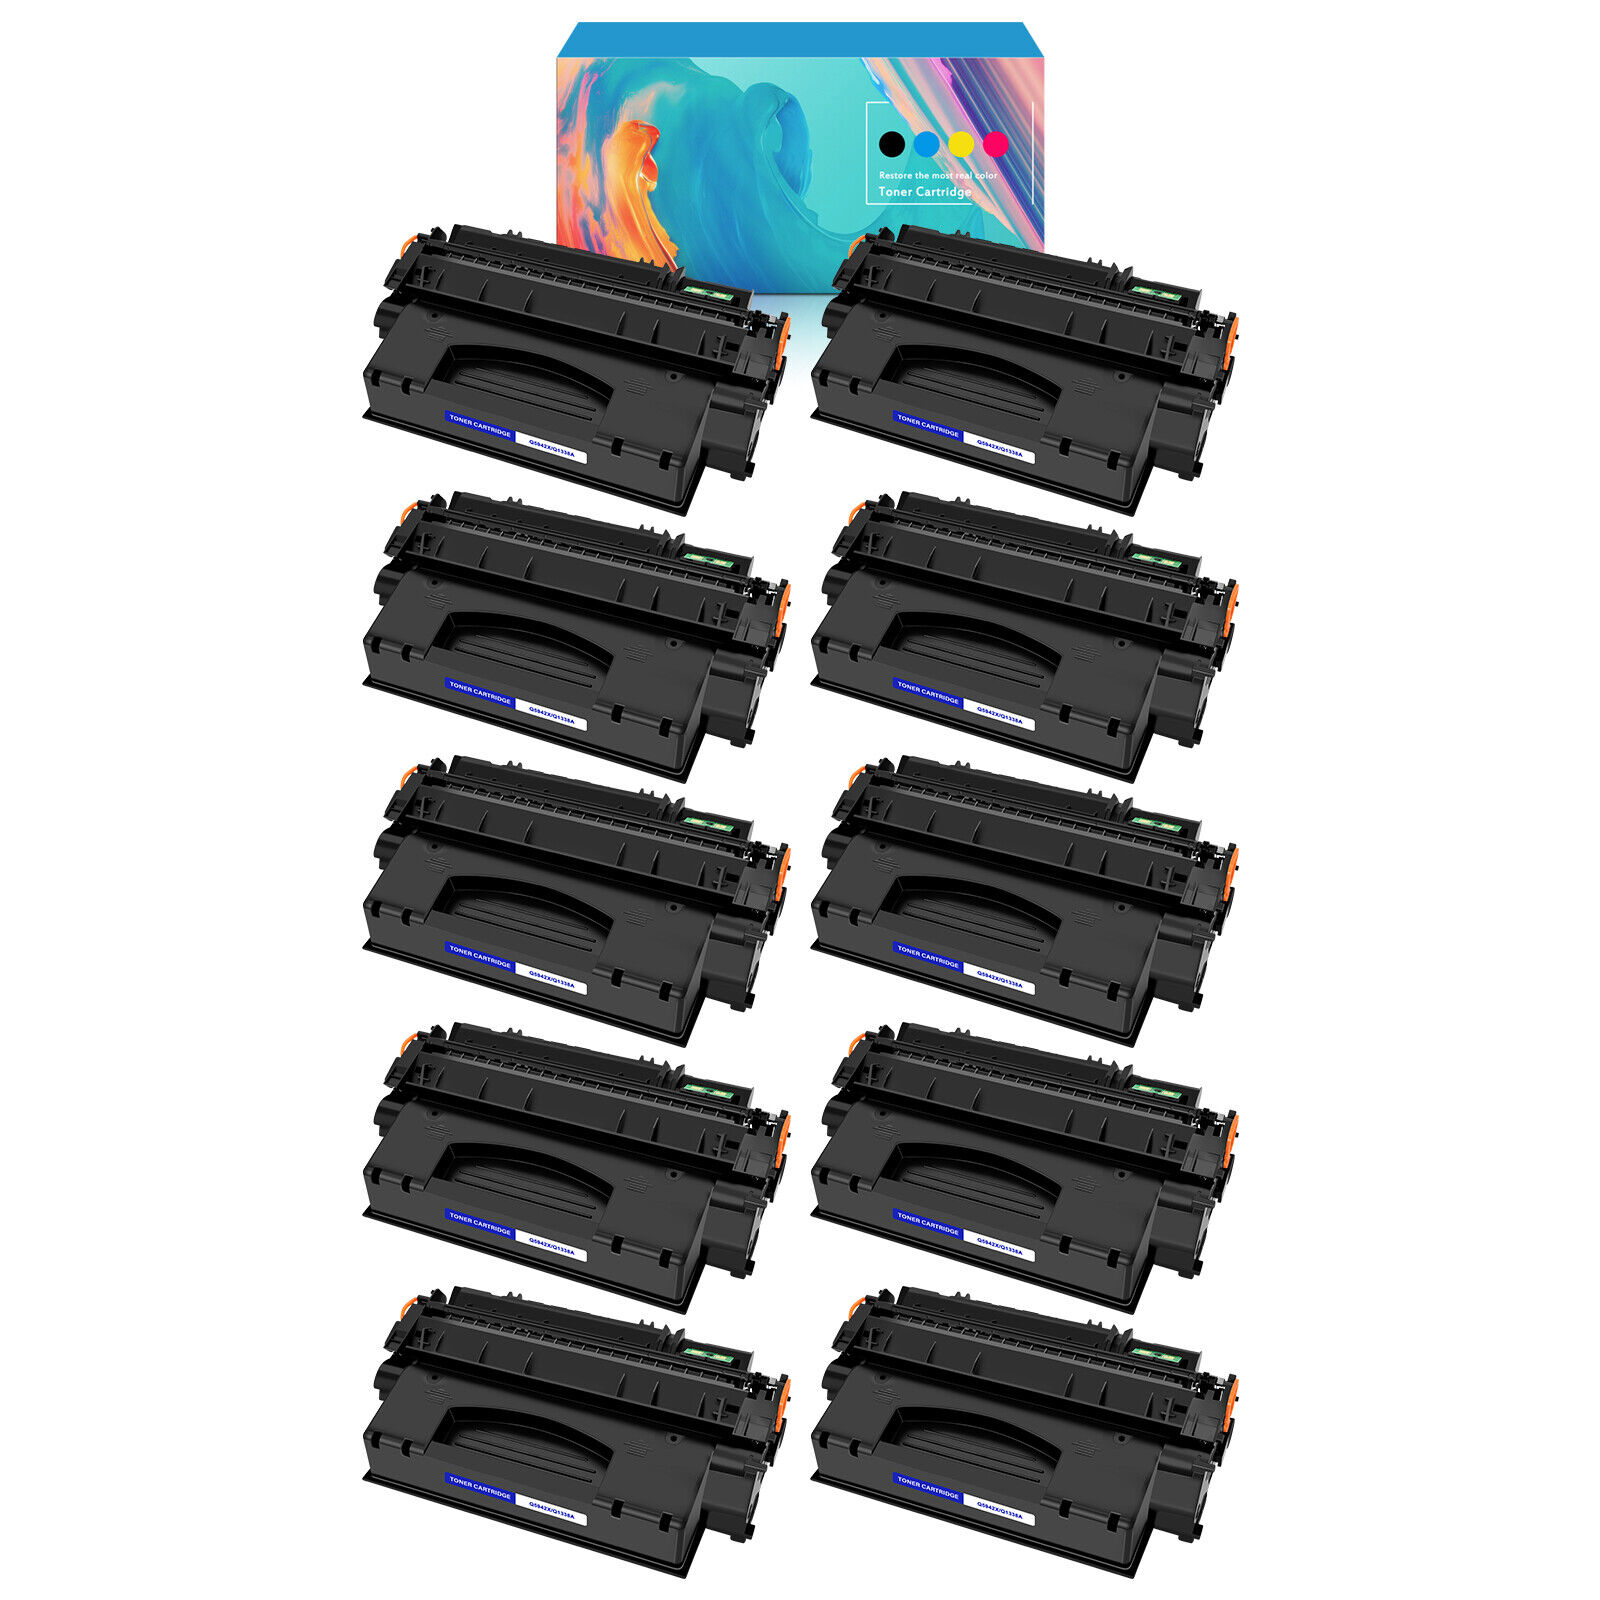 10PK Black Q1338A 38A Toner for HP LaserJet 4200 4200n 4200tn 4200dtn Printer